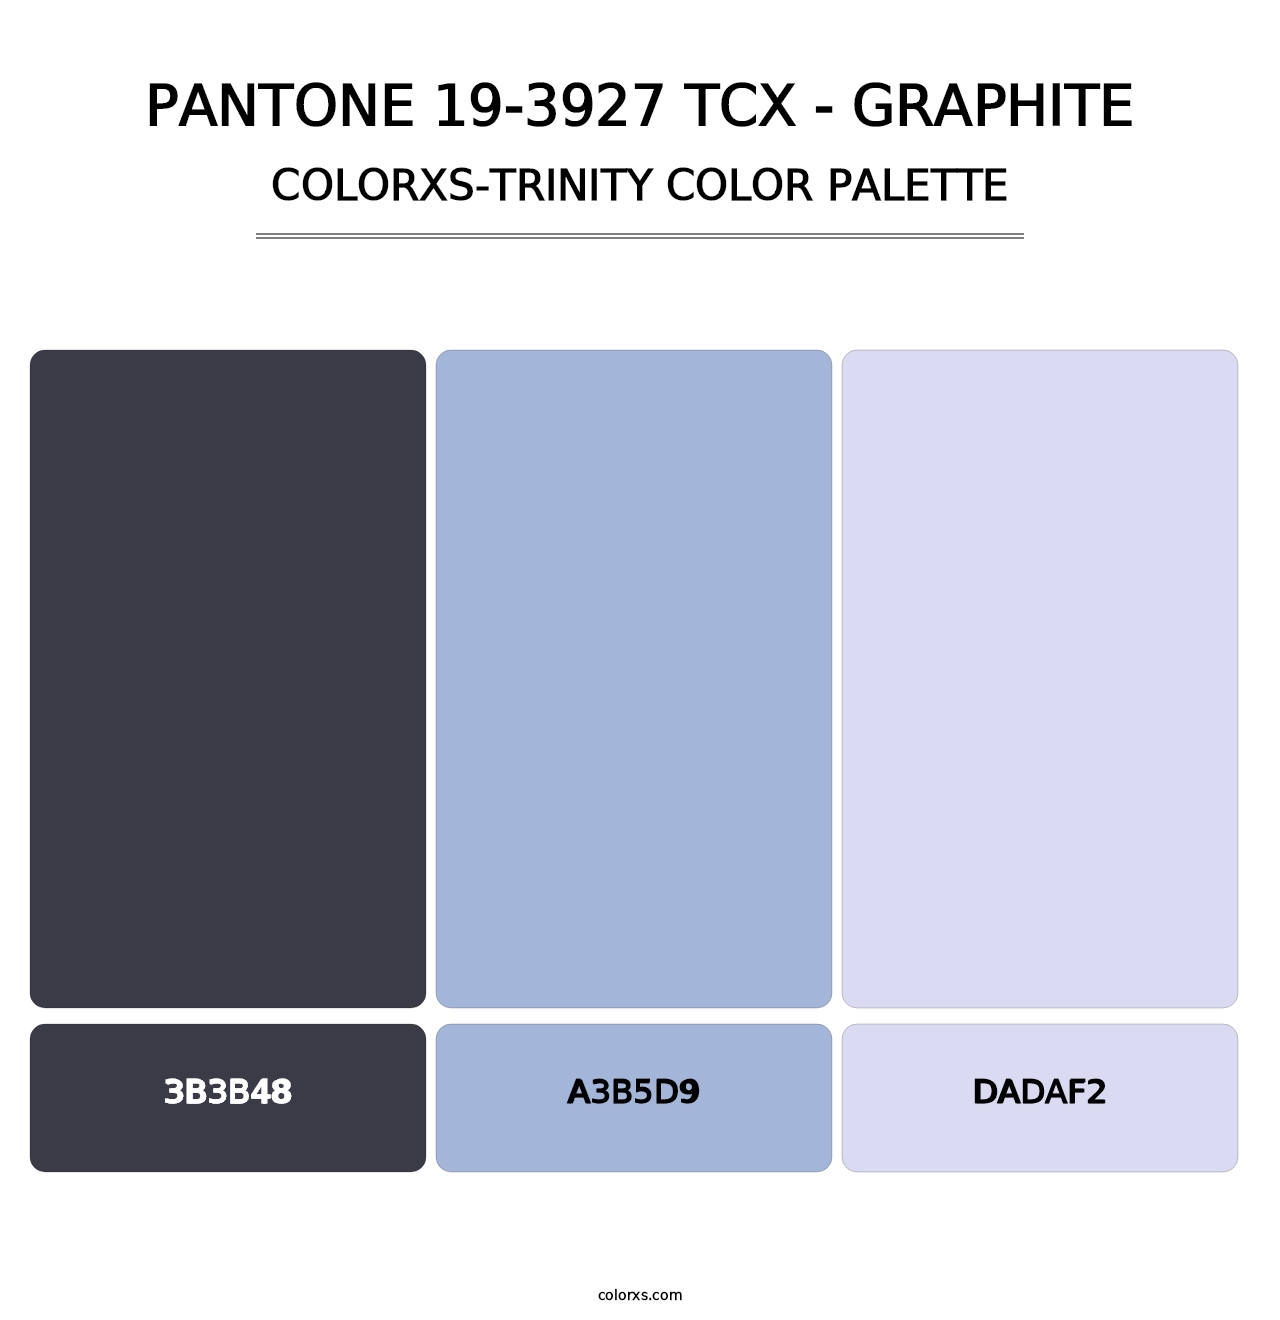 PANTONE 19-3927 TCX - Graphite - Colorxs Trinity Palette